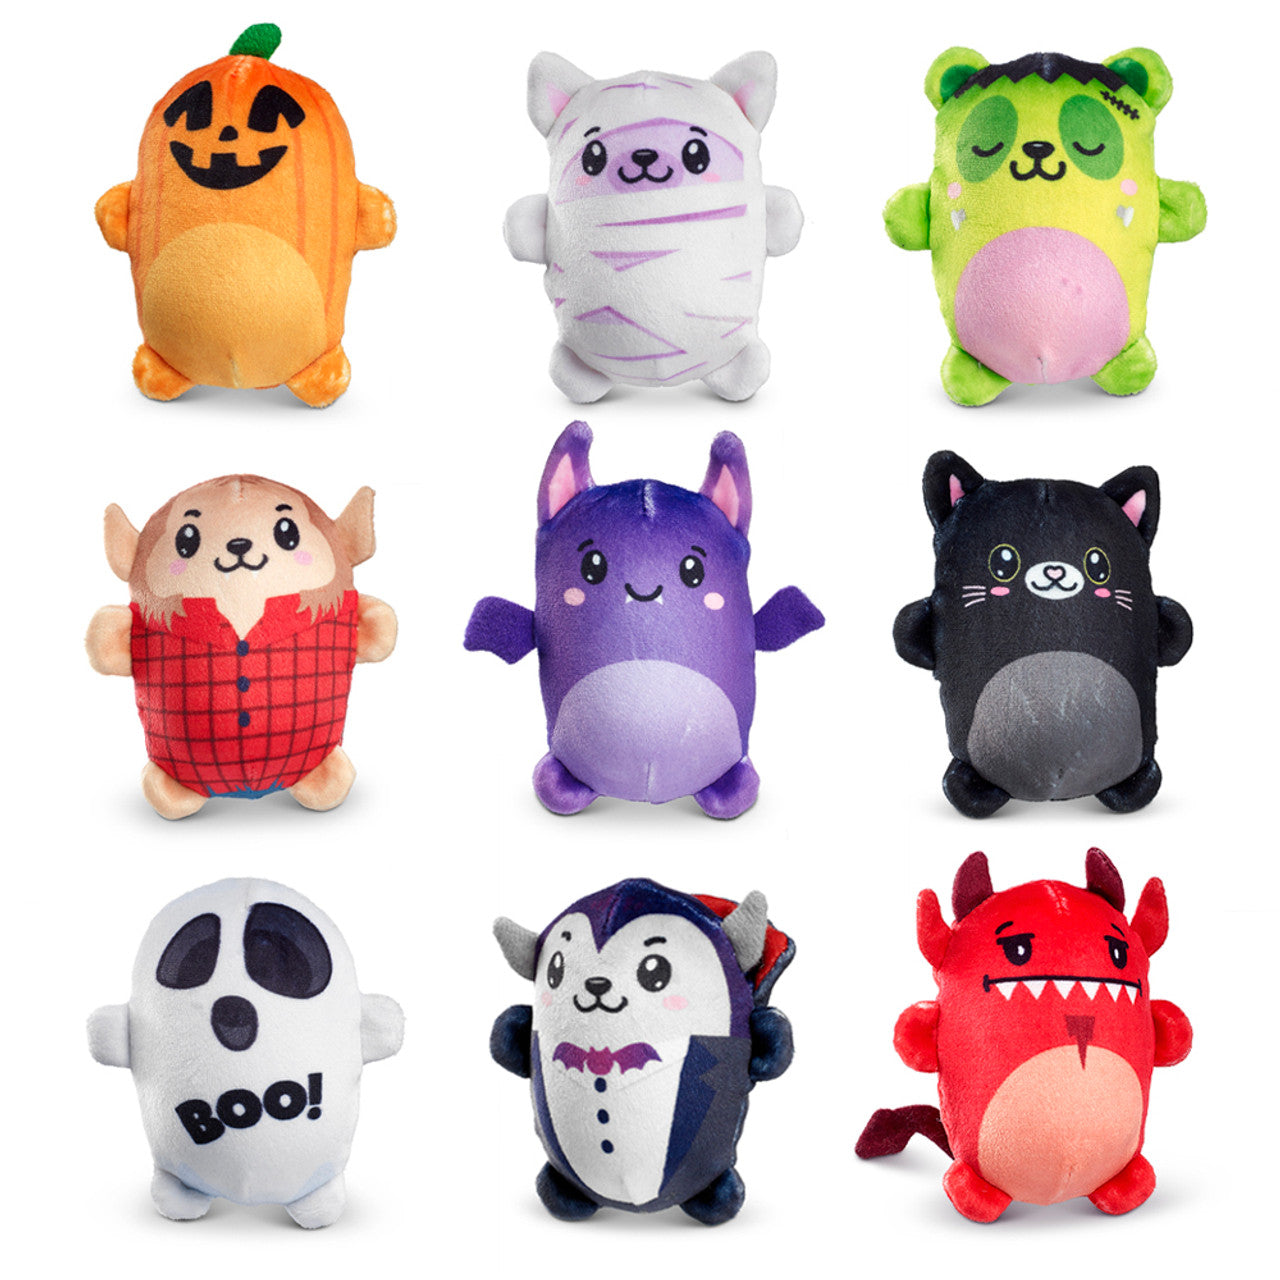 Bubble Stuffed Squishy Friends - Halloween Boo Edition (Random pick-One per order)